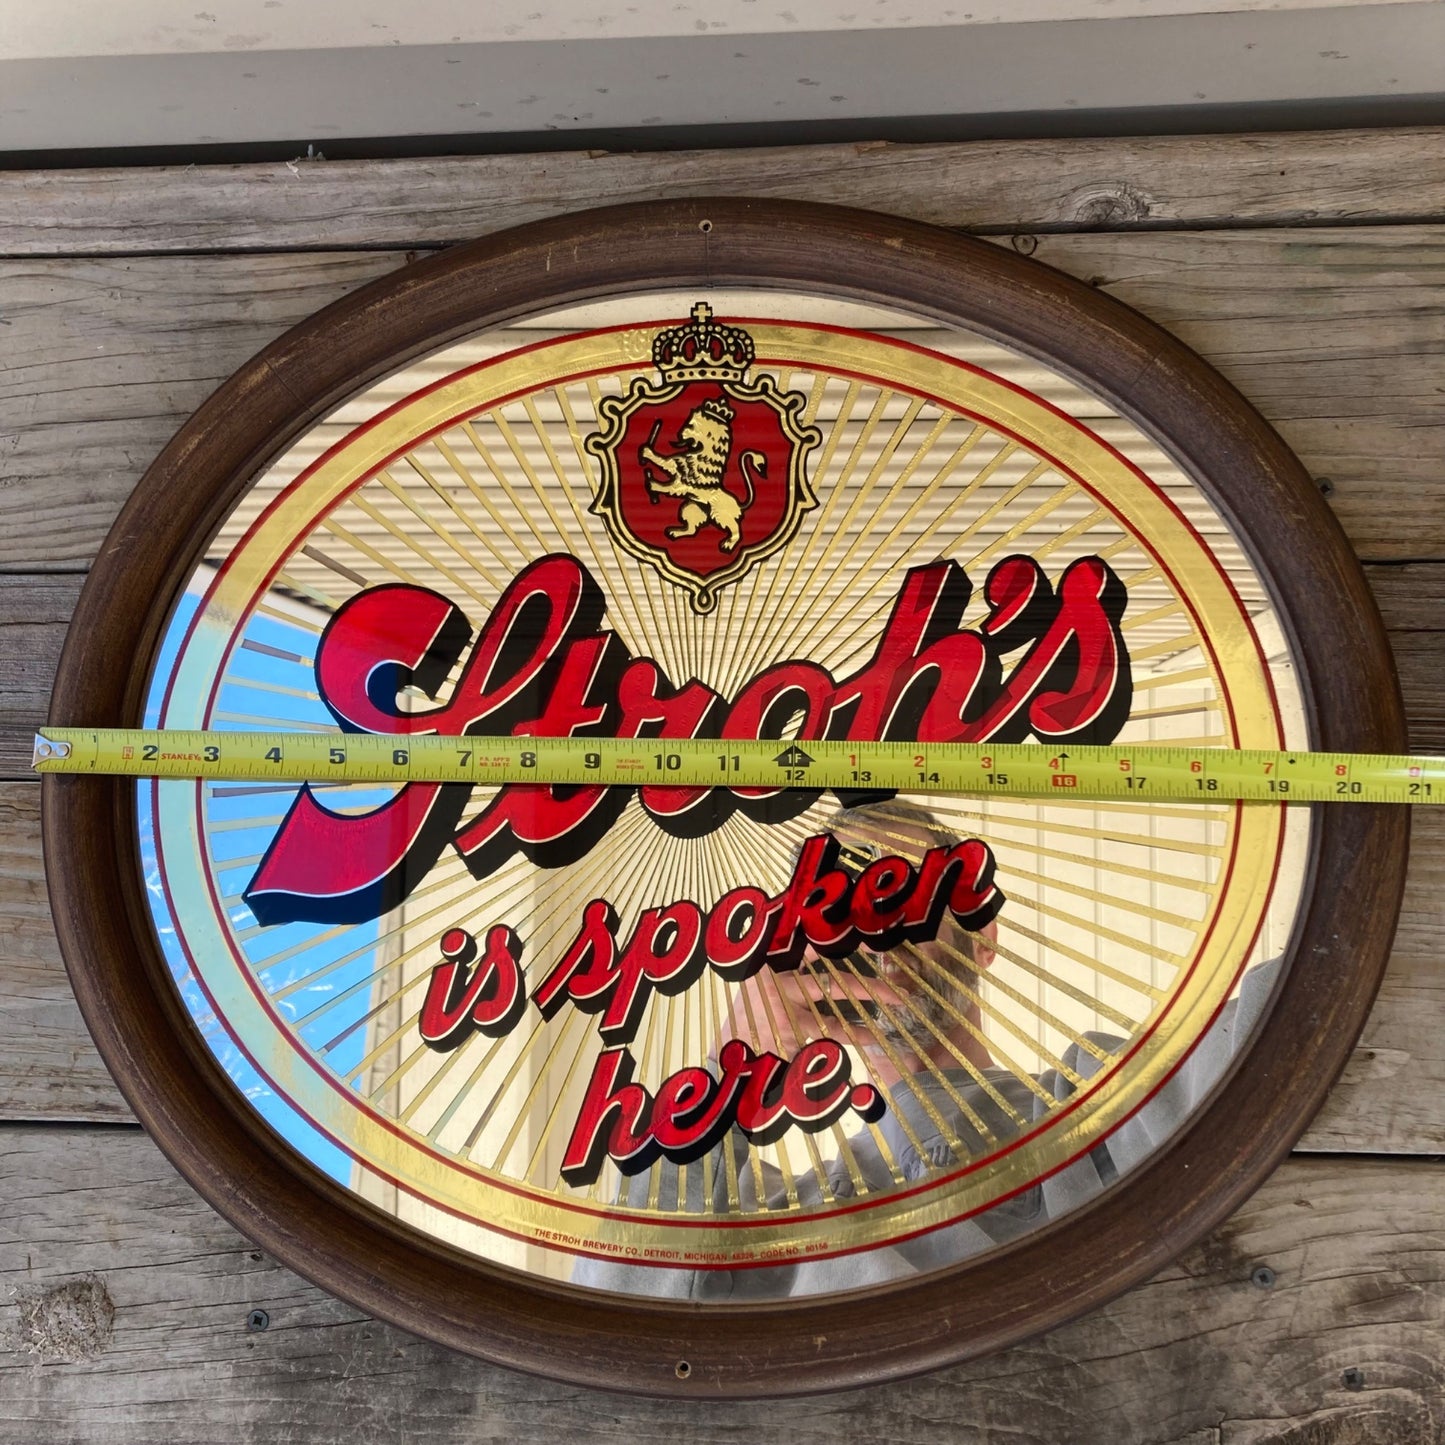 Vintage Stroh's Is Spoken Here Beer Mirror Oval Breweriana Sign